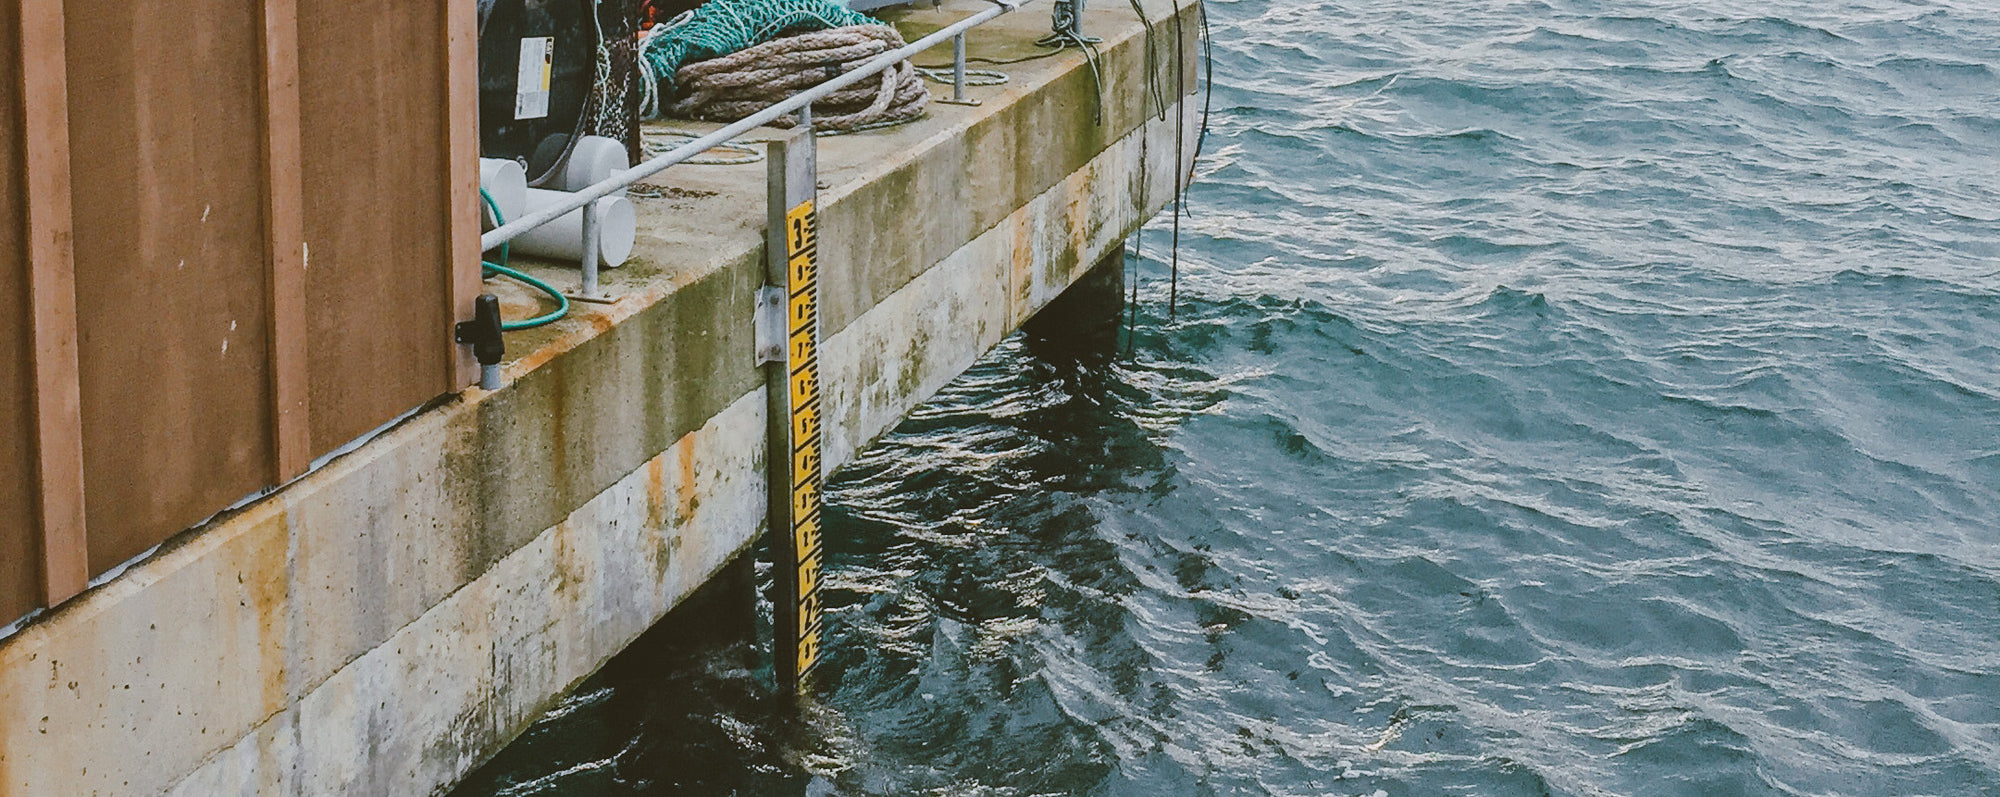 A sensor mounted to measure the tide